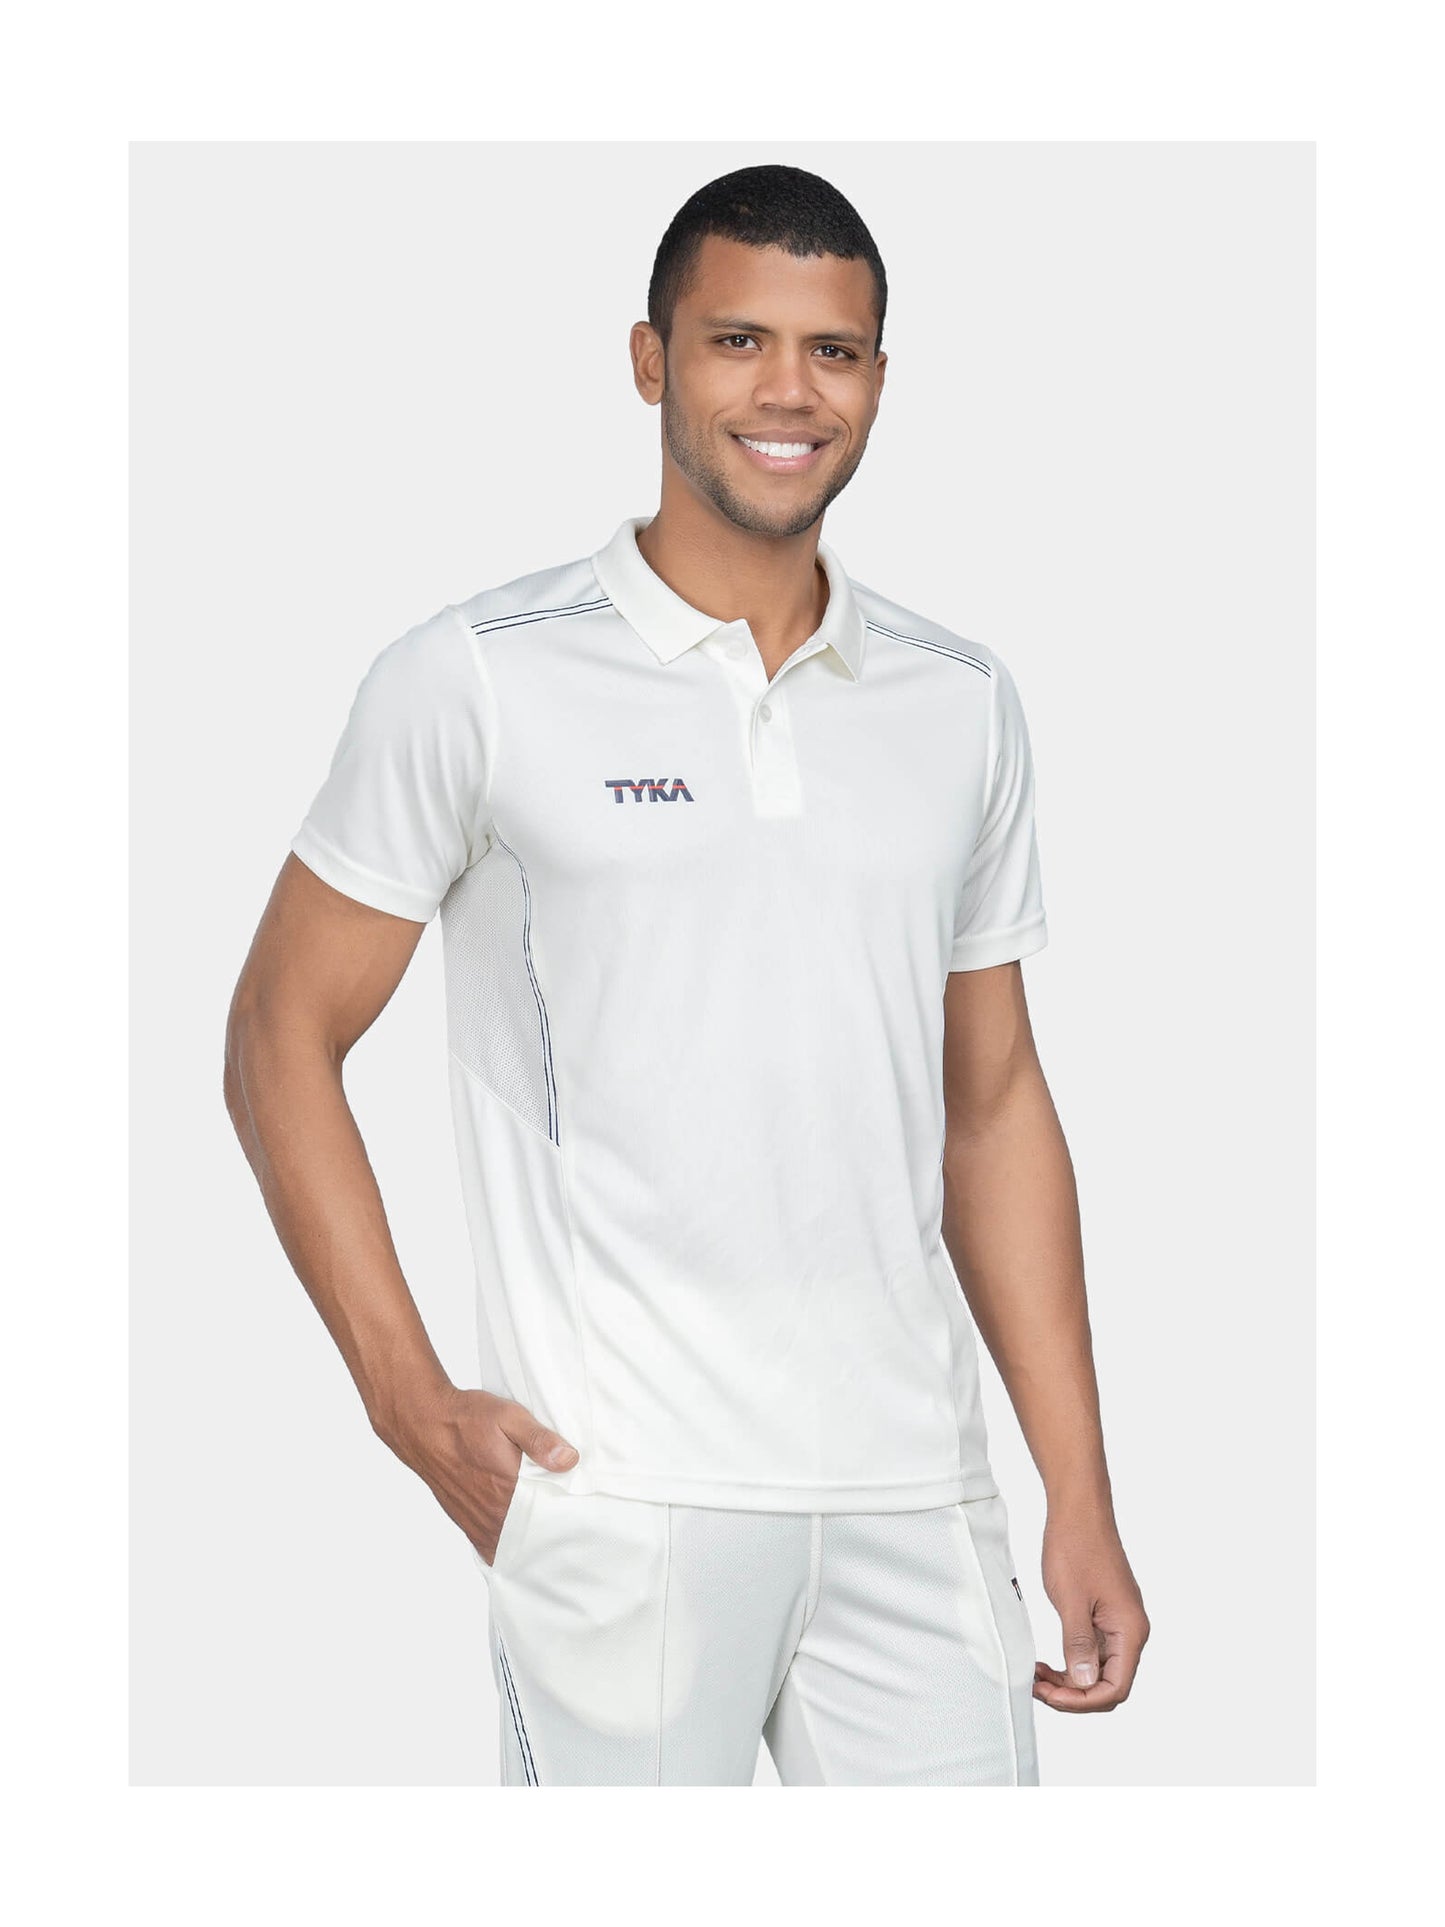 Tyka Prima White Shirt - Half Sleeves